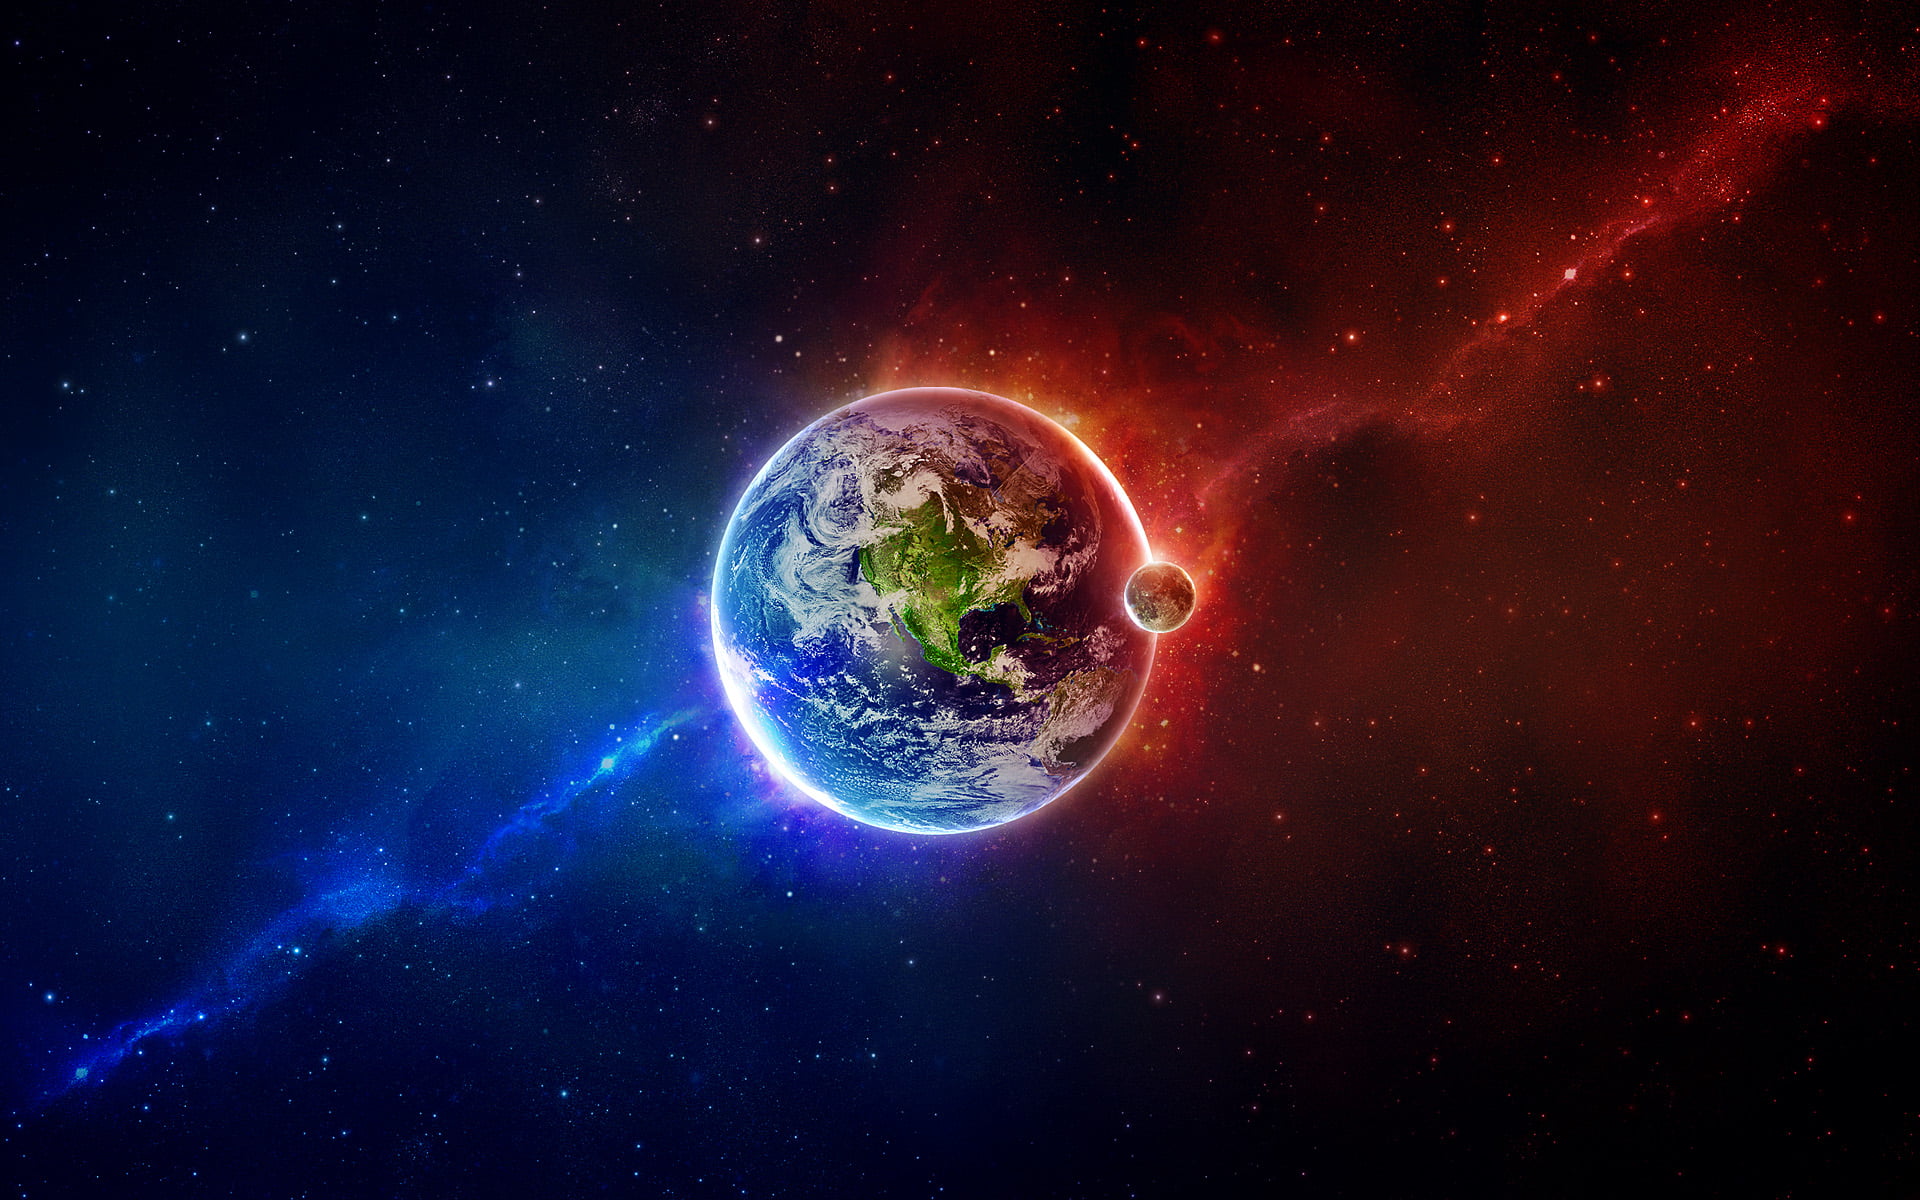 illustration of planet Earth